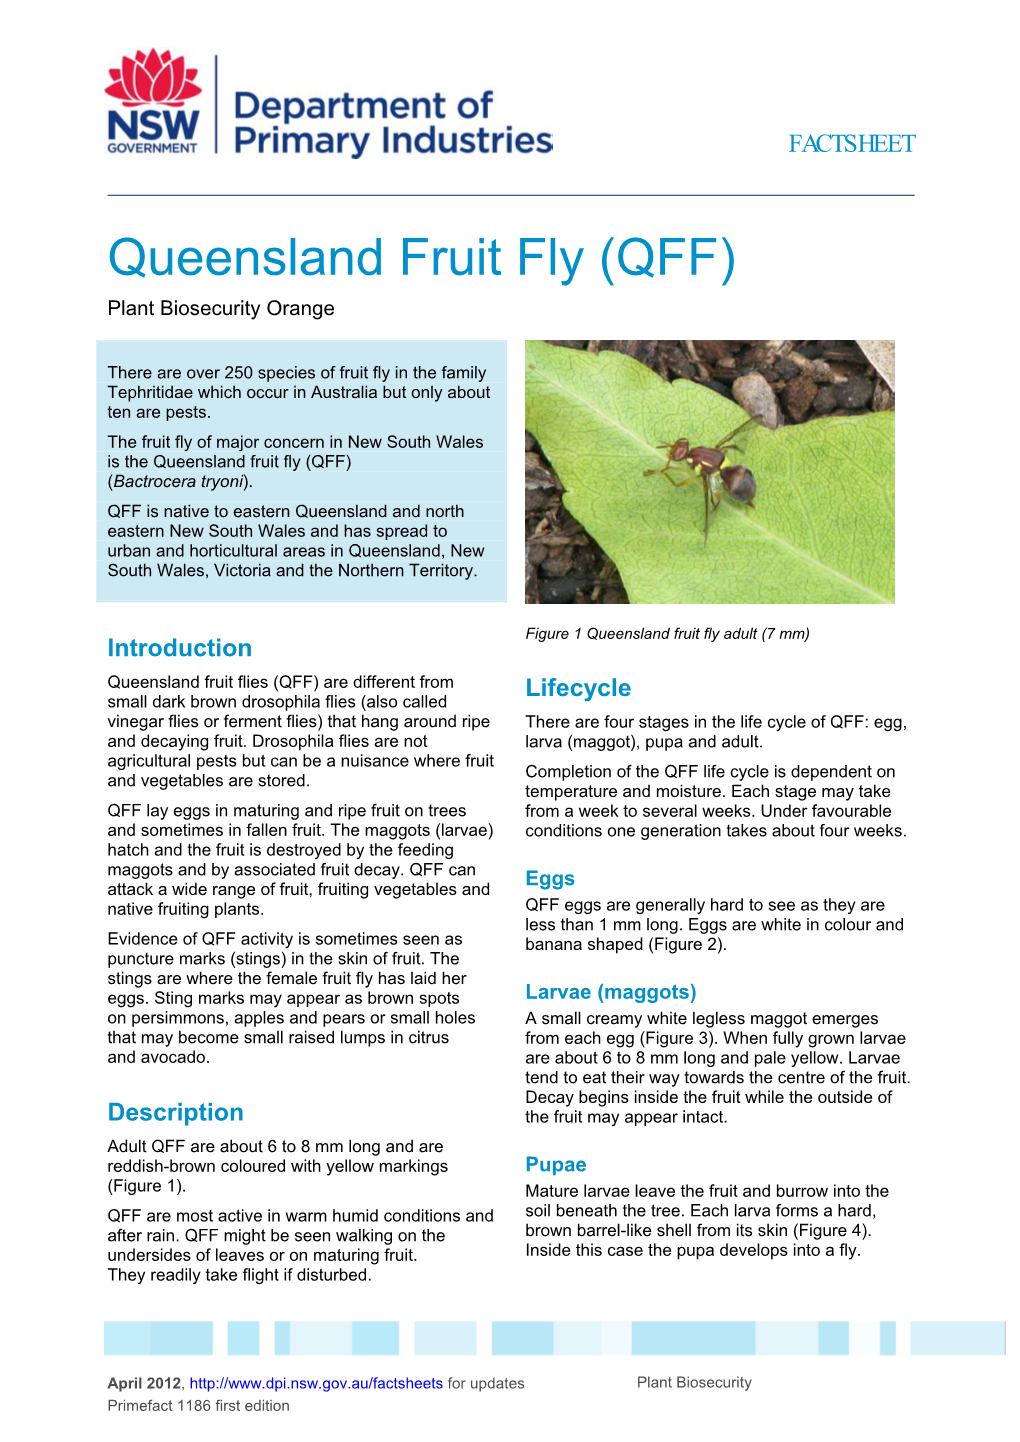 Queensland Fruit Fly (QFF) Plant Biosecurity Orange